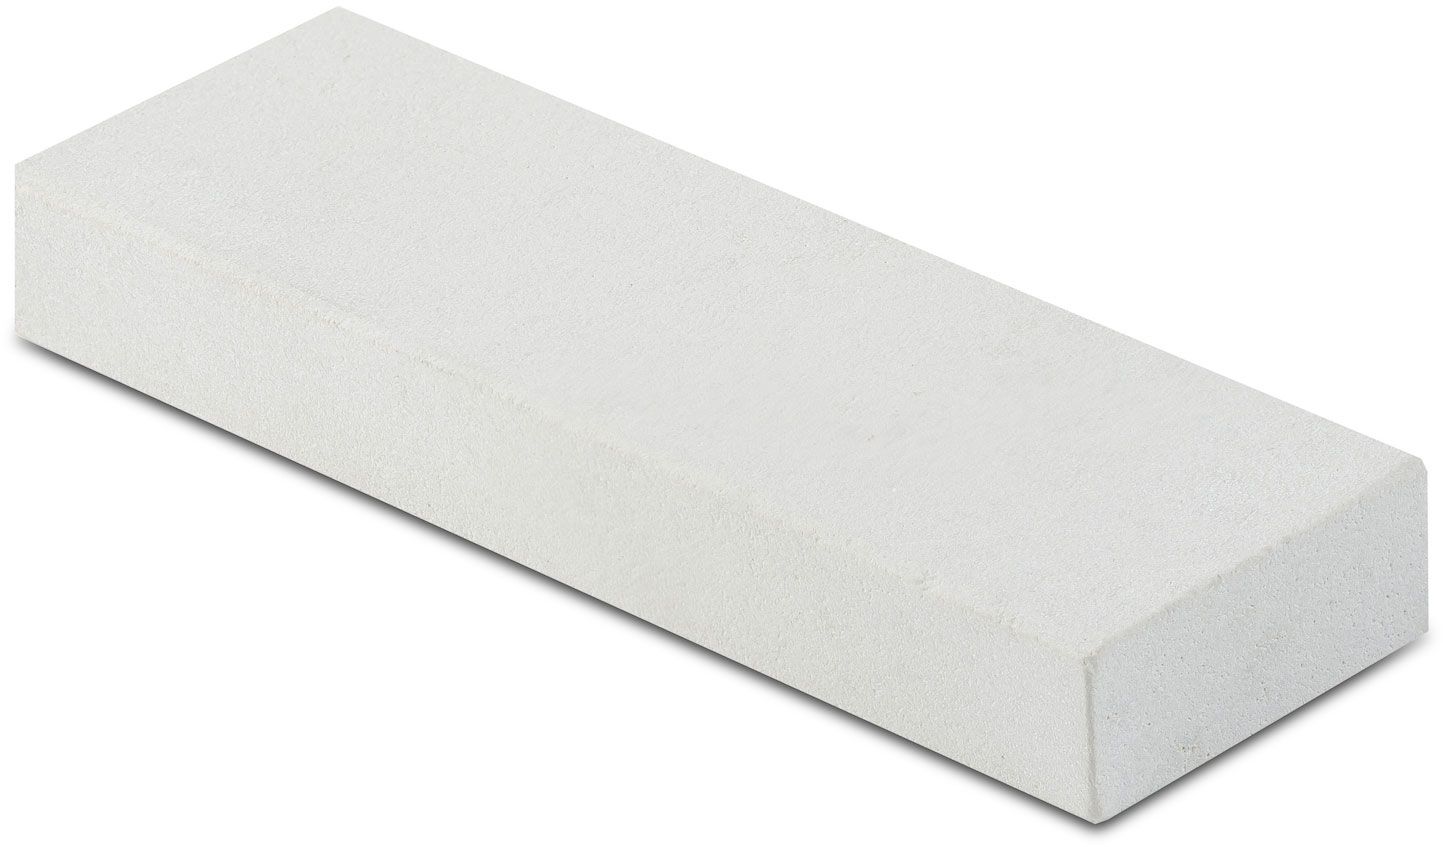 8 x 2 x 0.5" 30007 Soft Arkansas Bench Stone W/ Wooden Box Medium Grit 600-800 